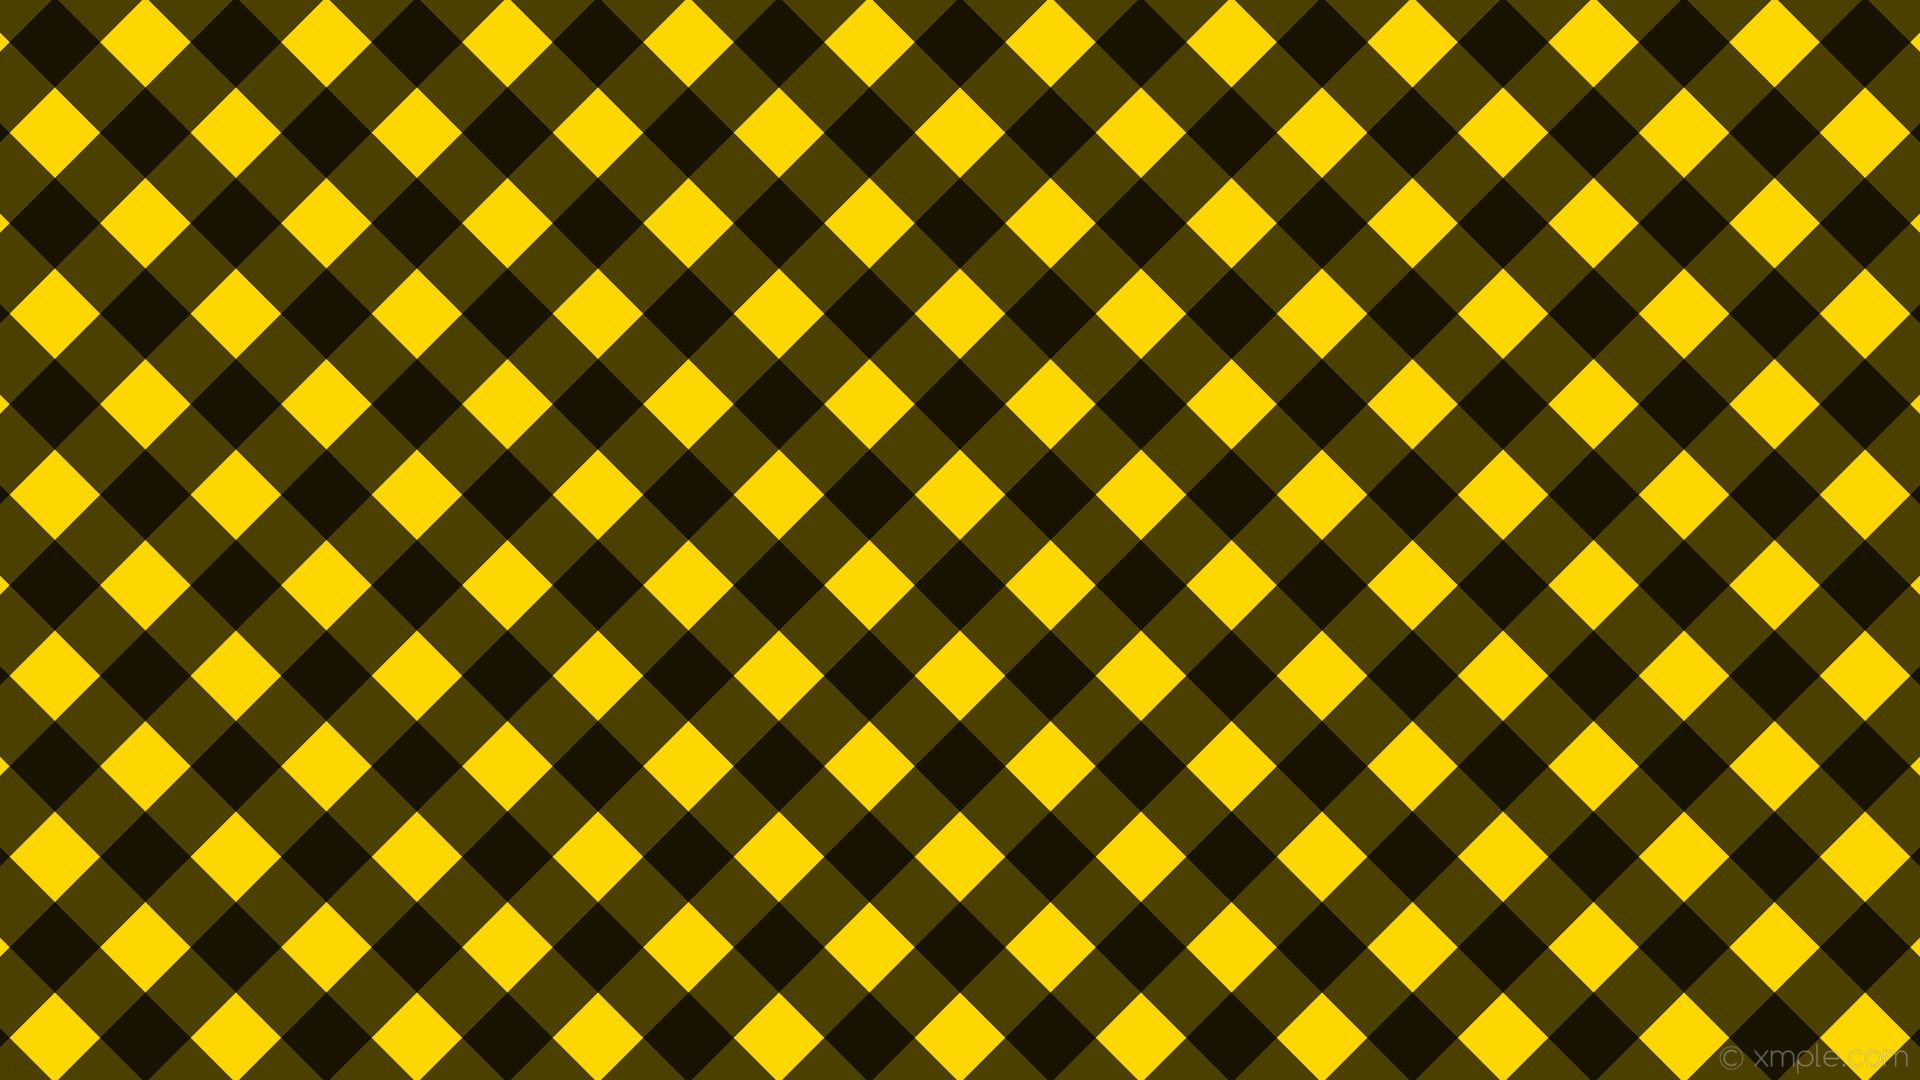 A yellow and black diamond pattern - Checkered